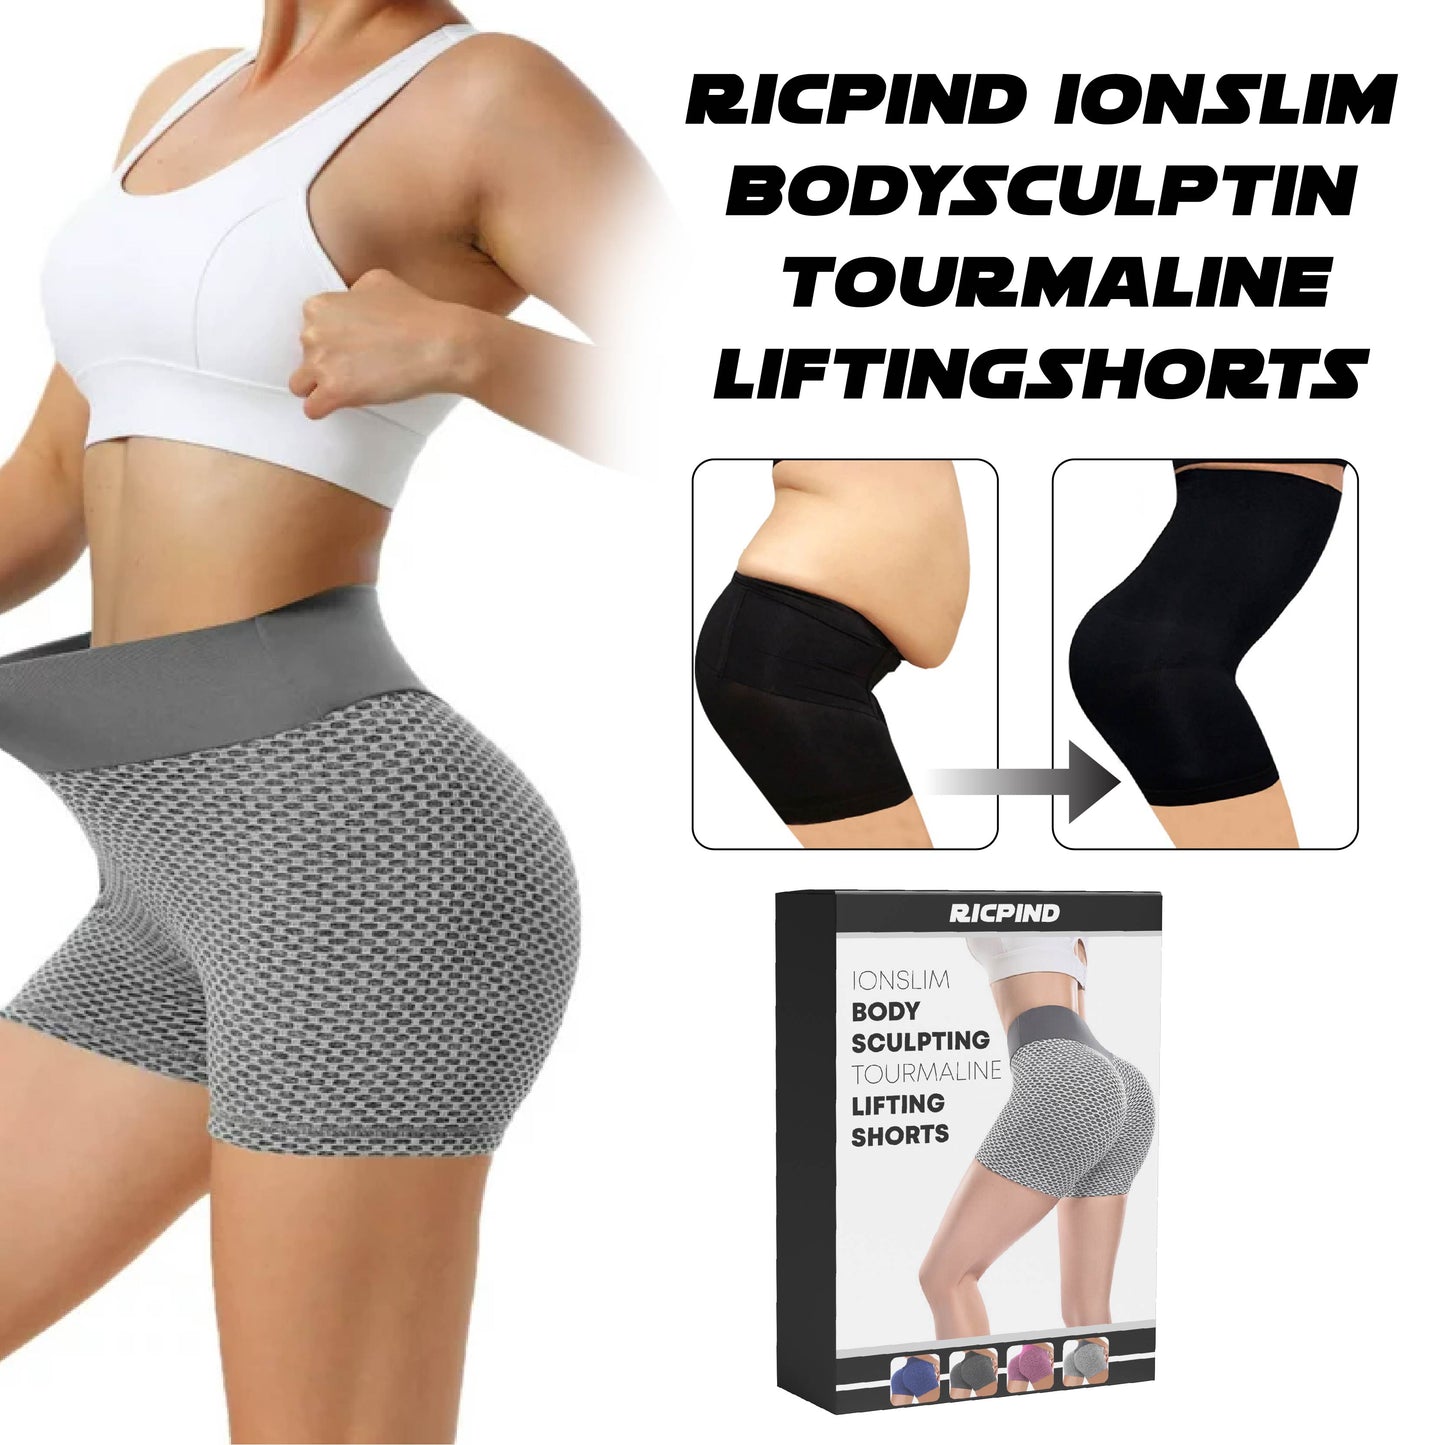 Ricpind IONSlim BodySculpting Tourmaline LiftingShorts